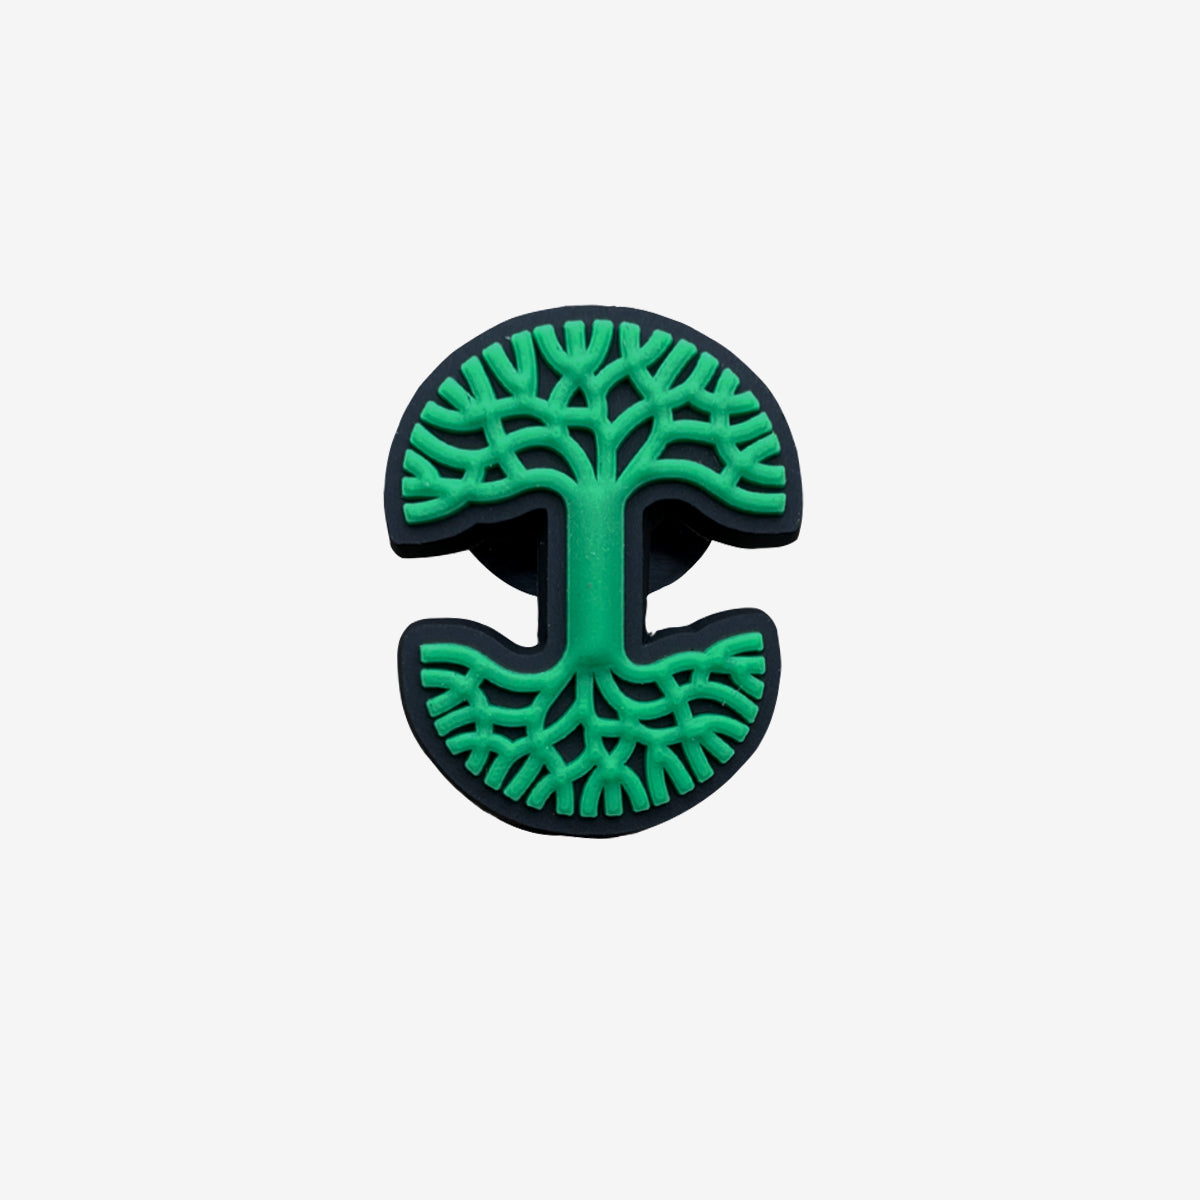 Green and black Oaklandish tree logo shoe charm. 